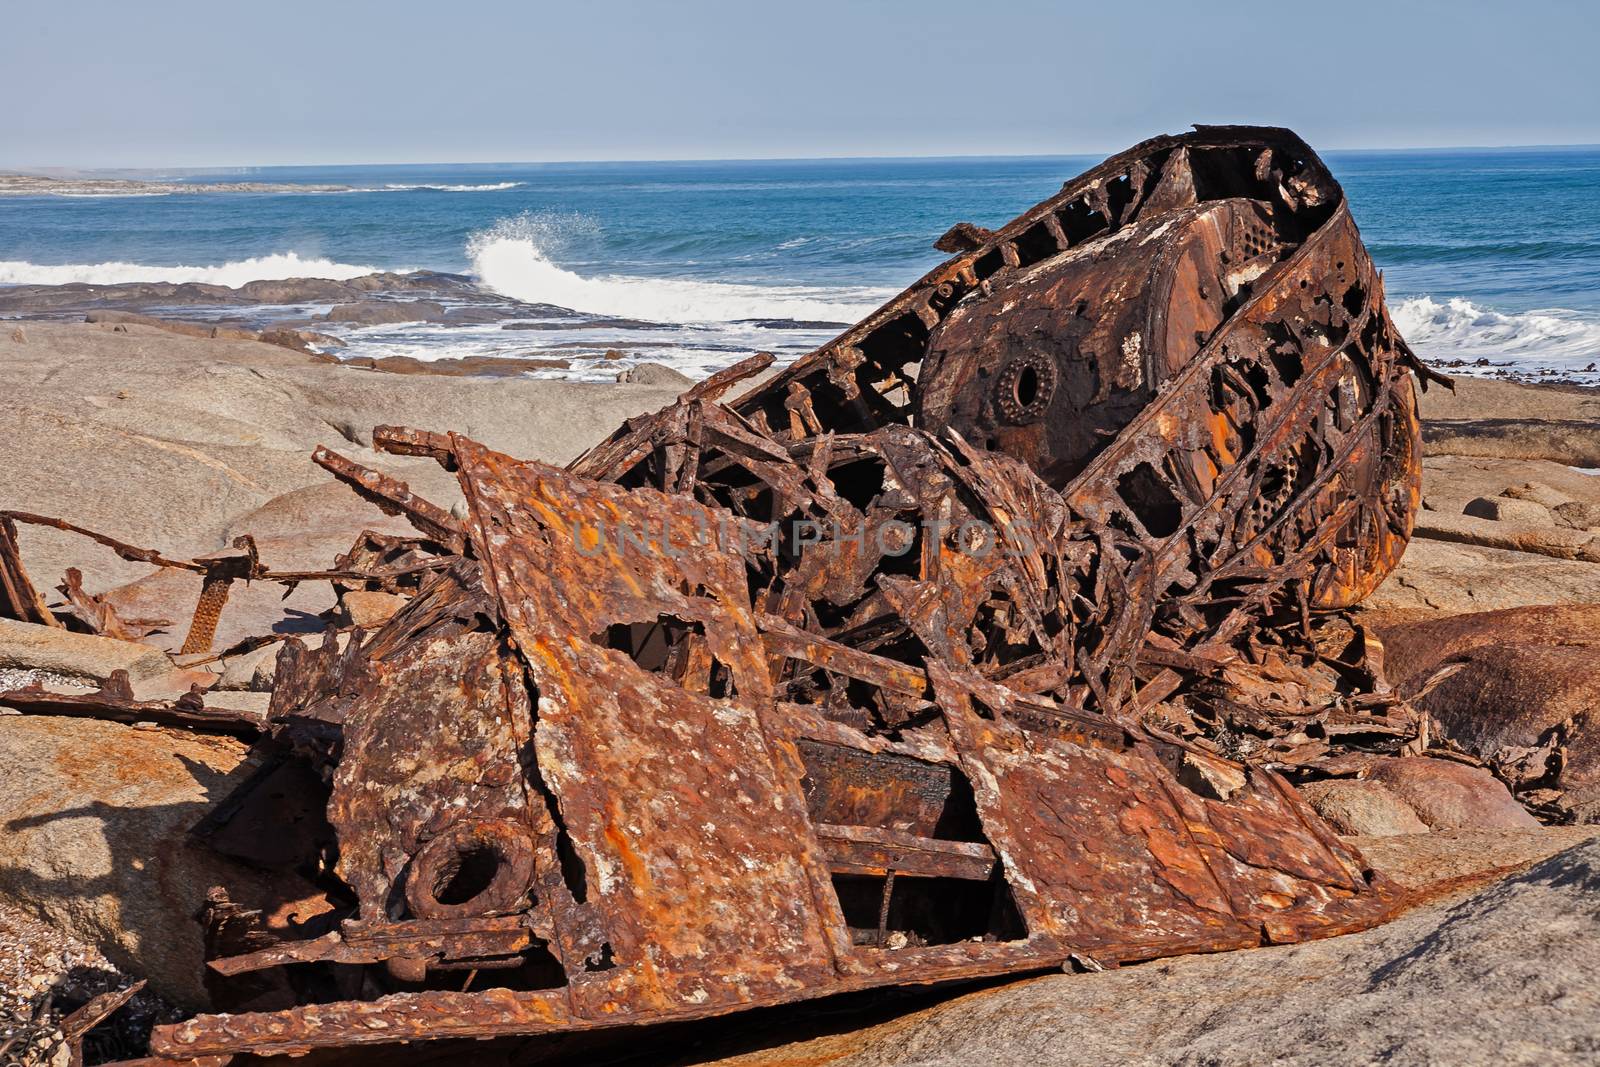 Aristea Shipwreck 11747 by kobus_peche